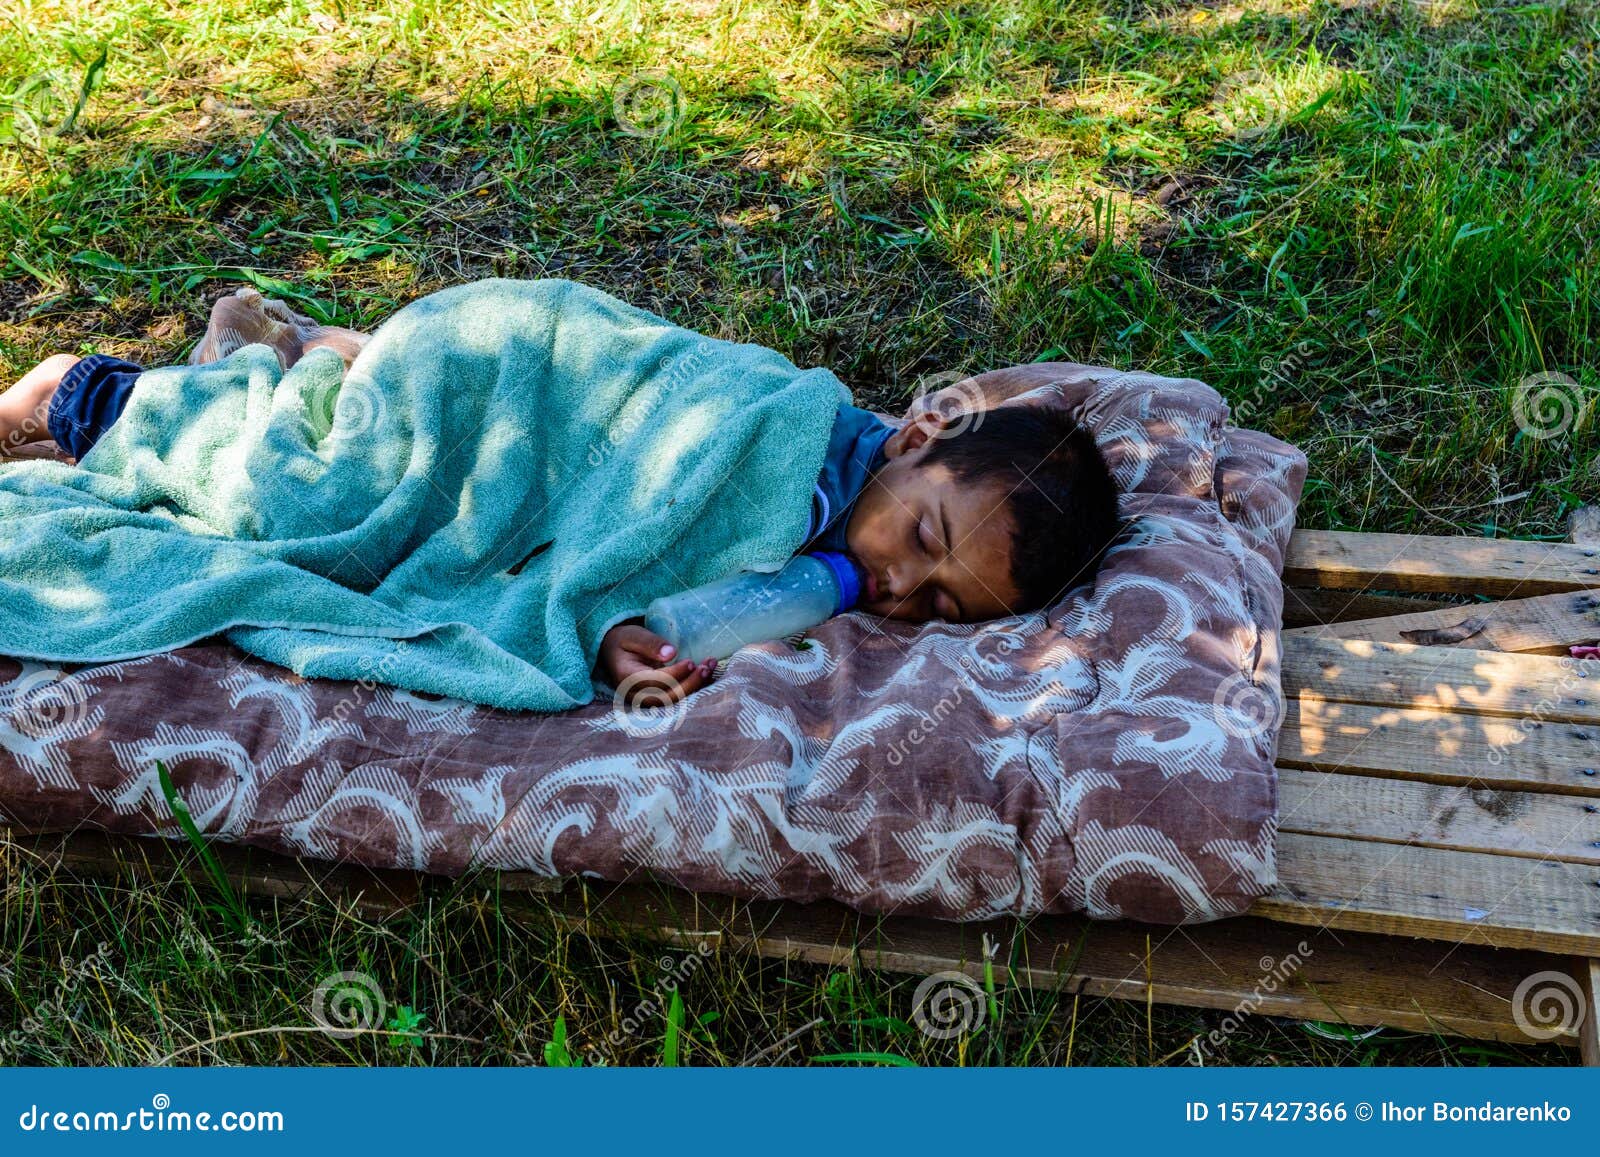 Little gypsy boy with bottle of the milk sleeping. Kremenchug, Ukraine - june 8, 2019: Little gypsy boy with bottle of milk sleeping